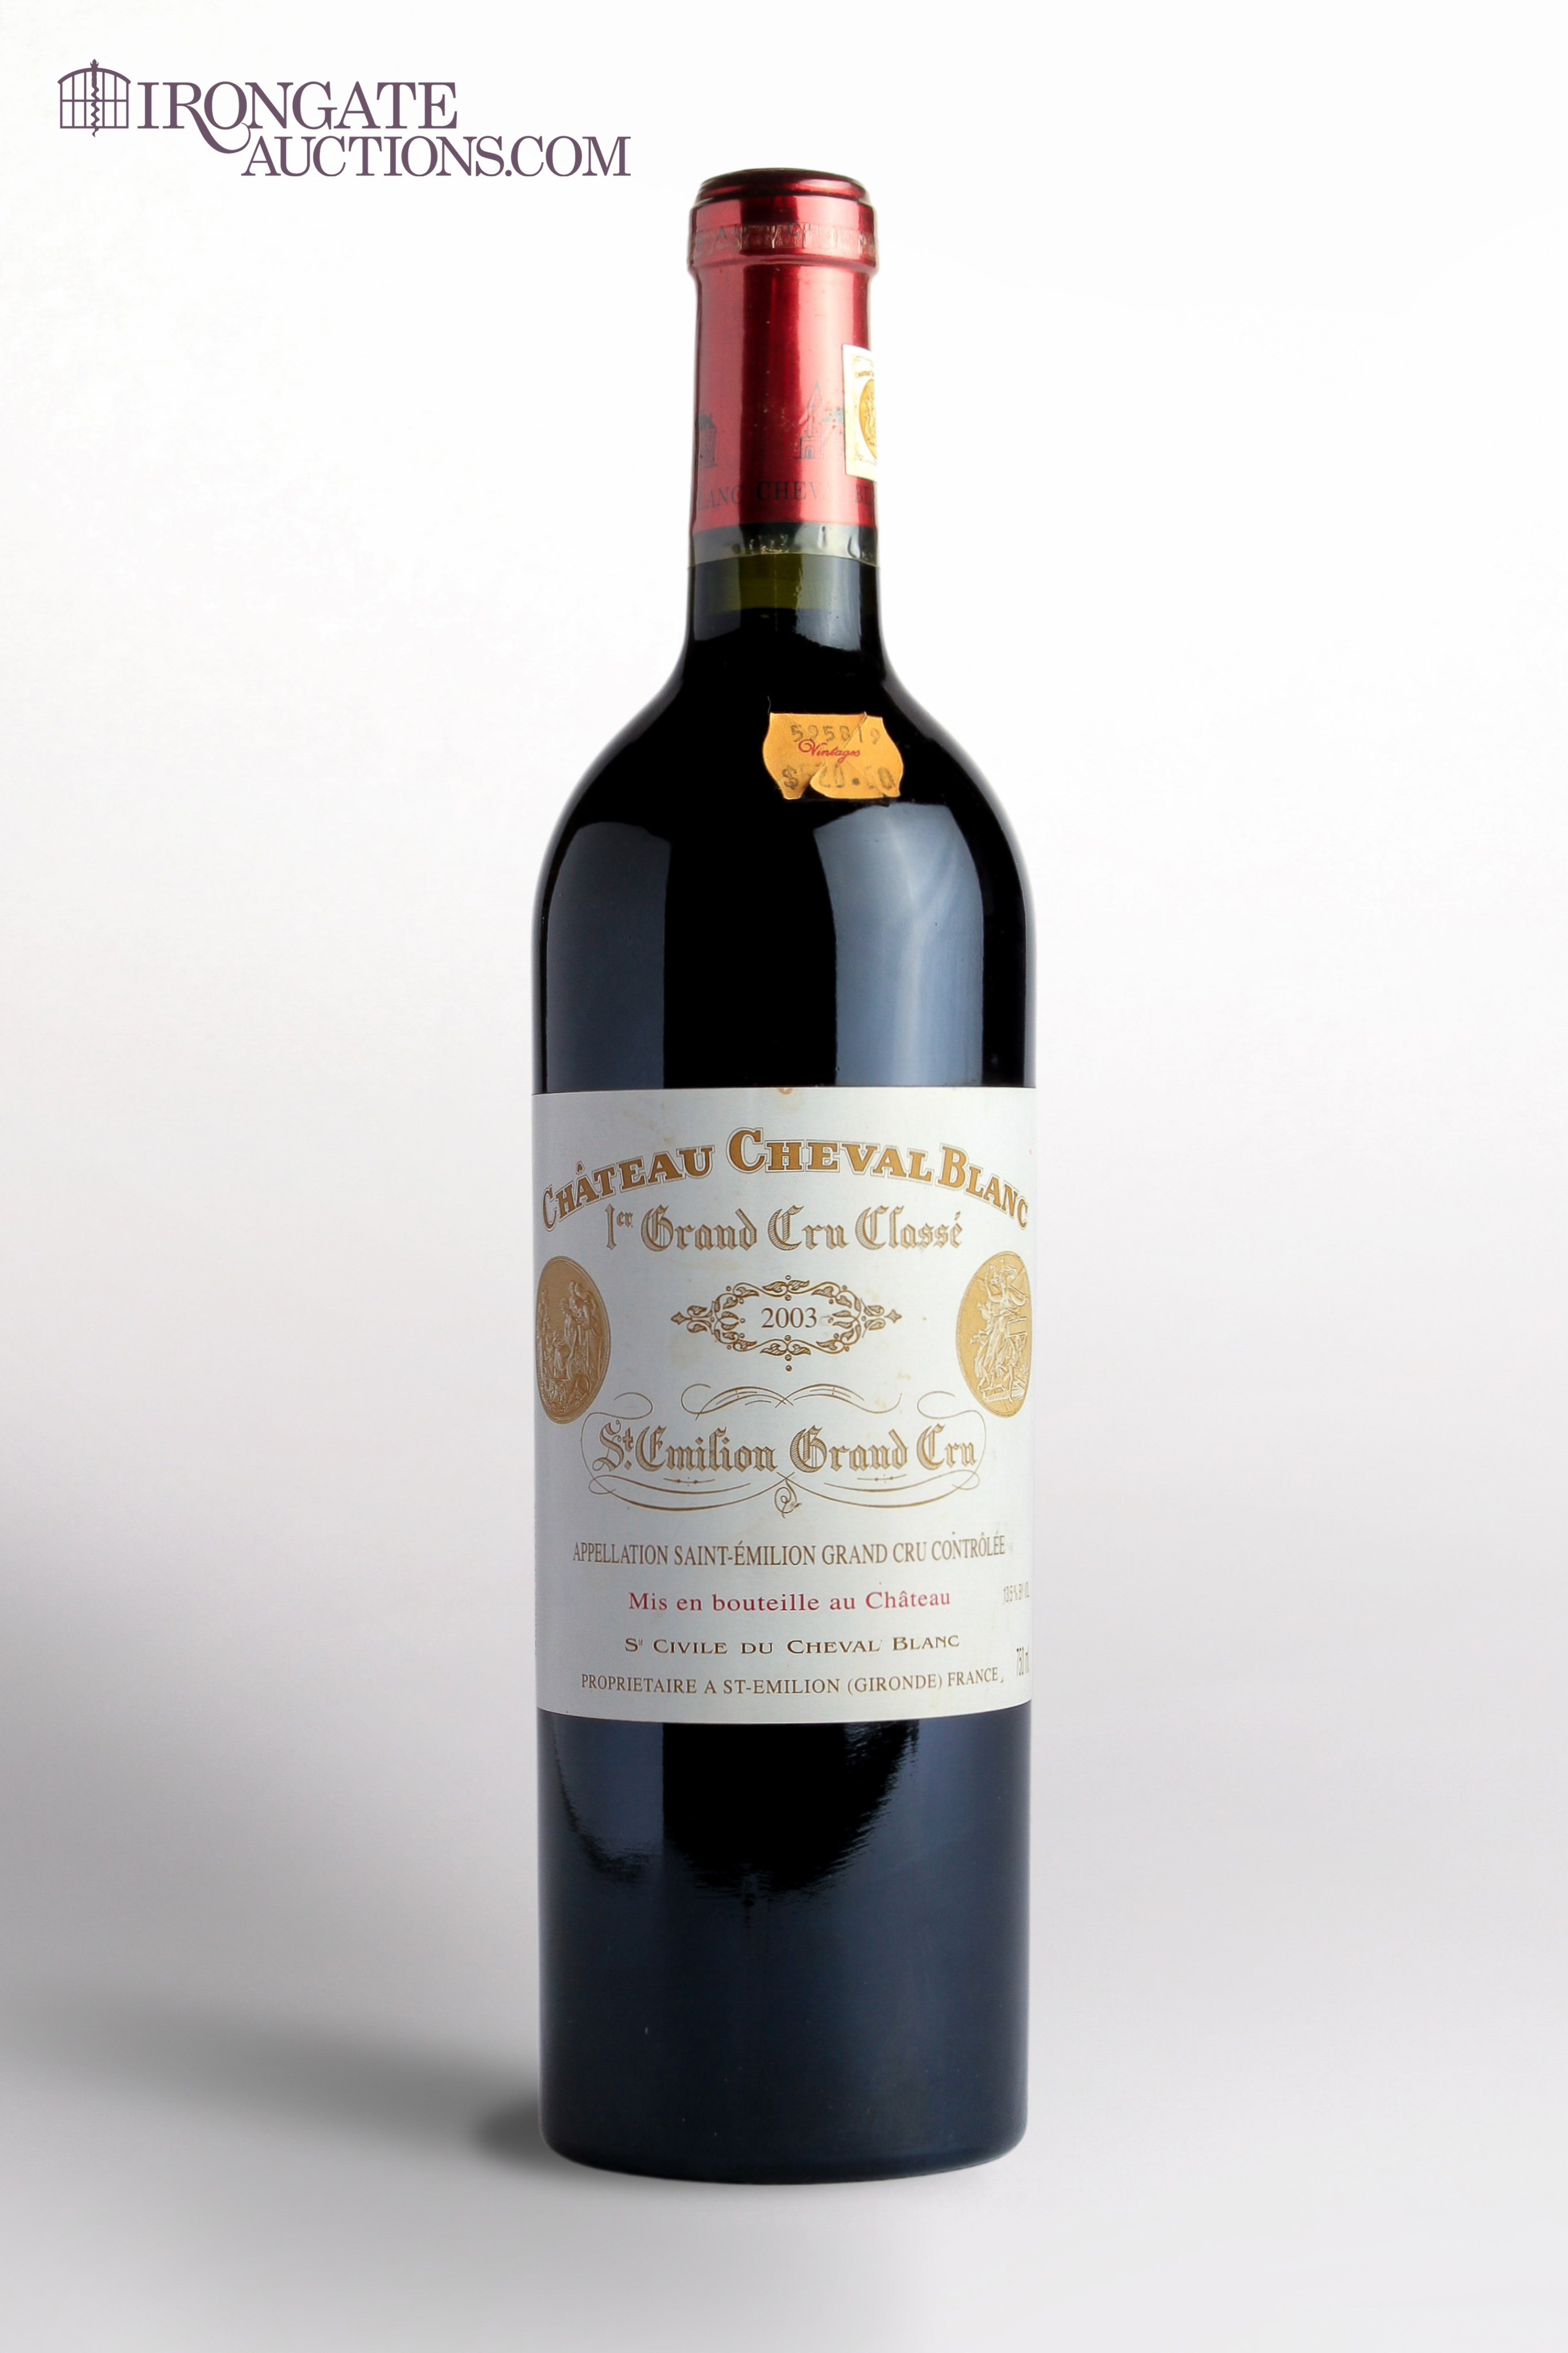 2003 Chateau Cheval Blanc, Saint-Emilion  prices, stores, tasting notes &  market data